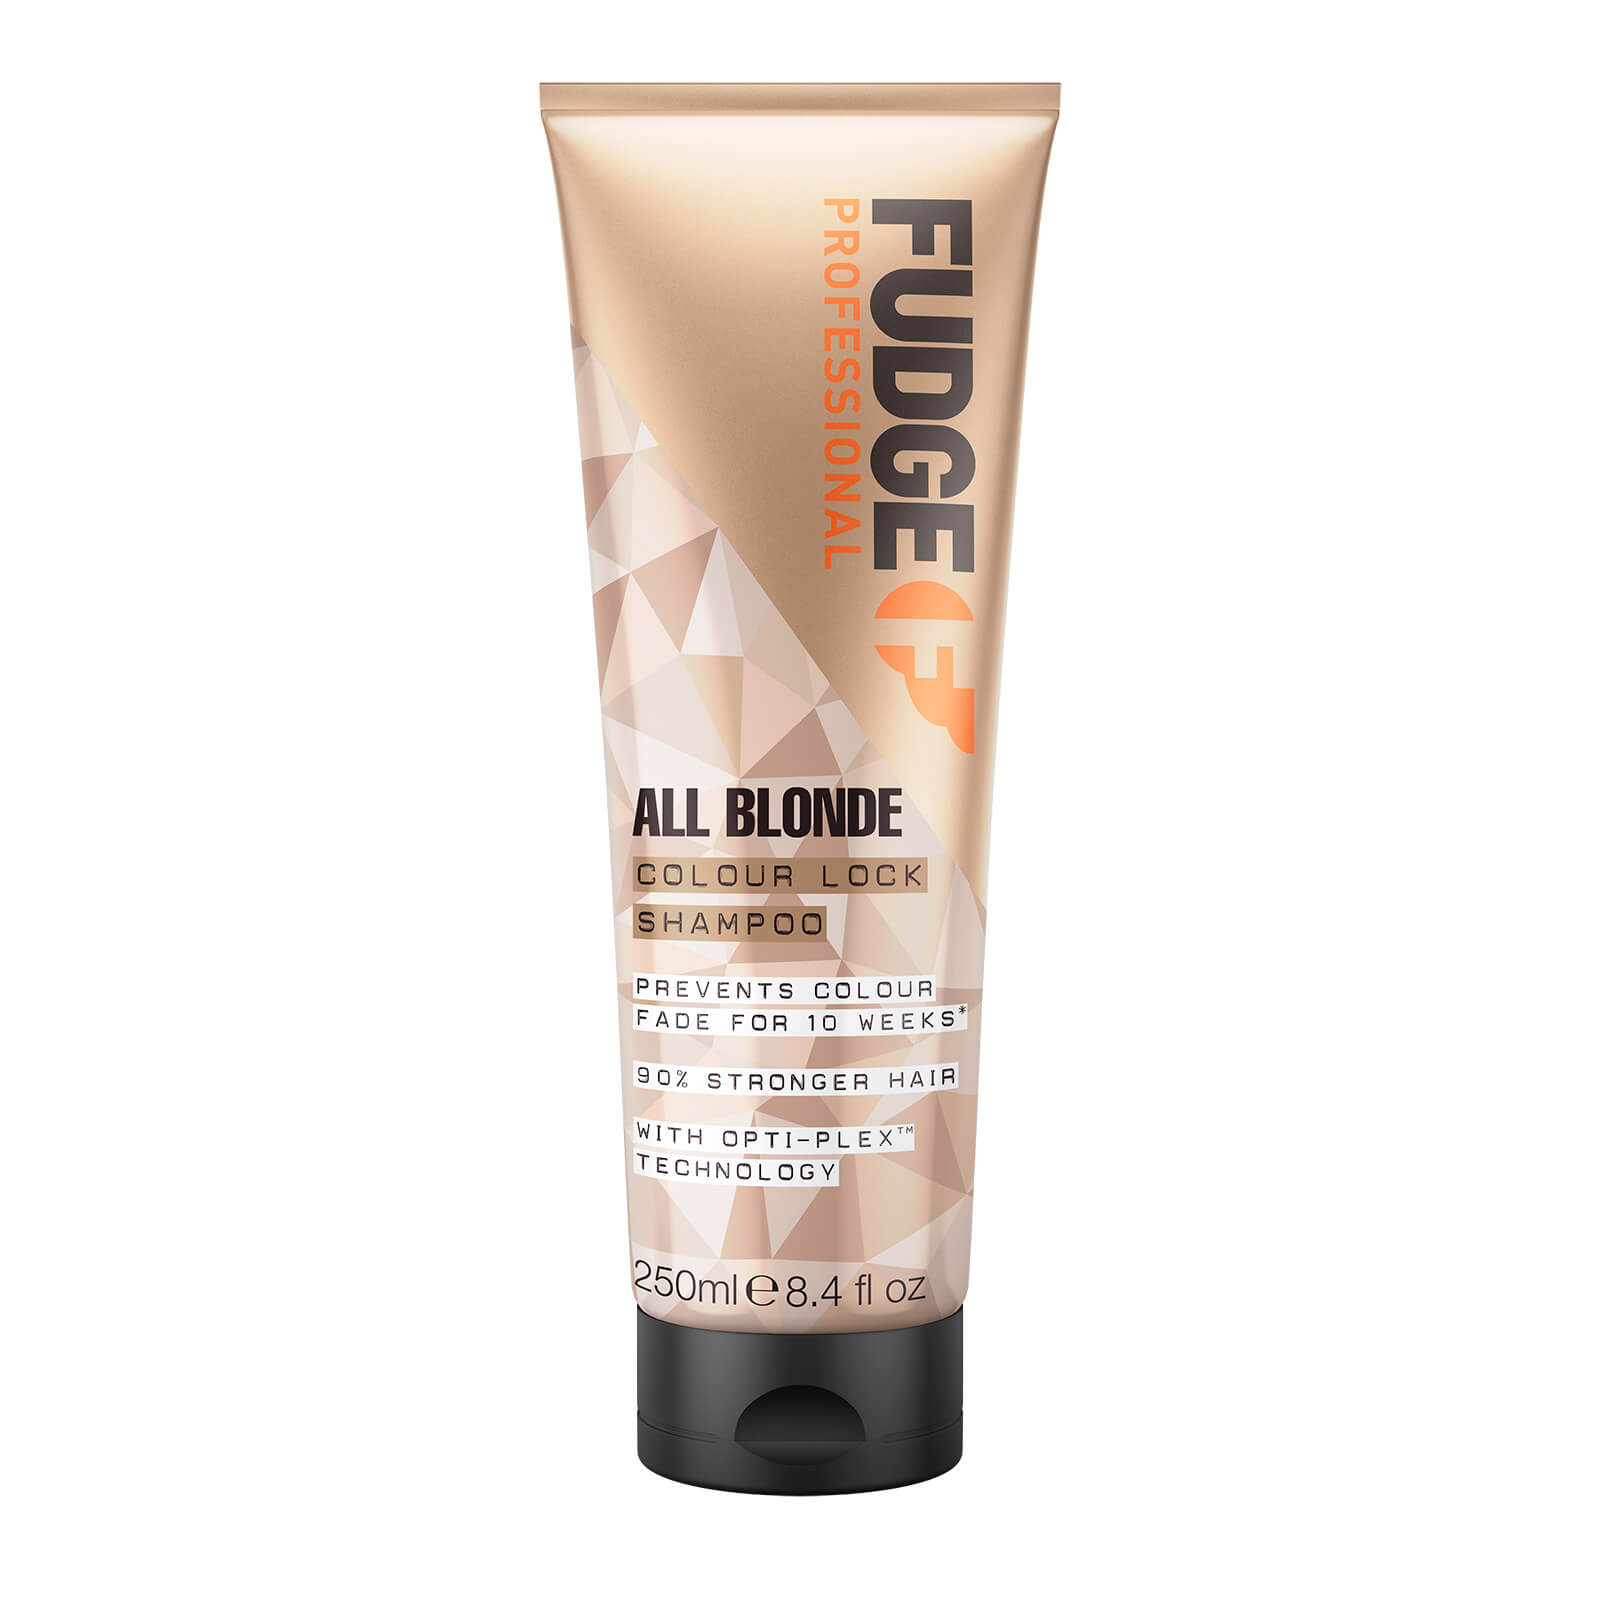 All Blonde Colour Lock Shampoo 250ml | Fudge Professional